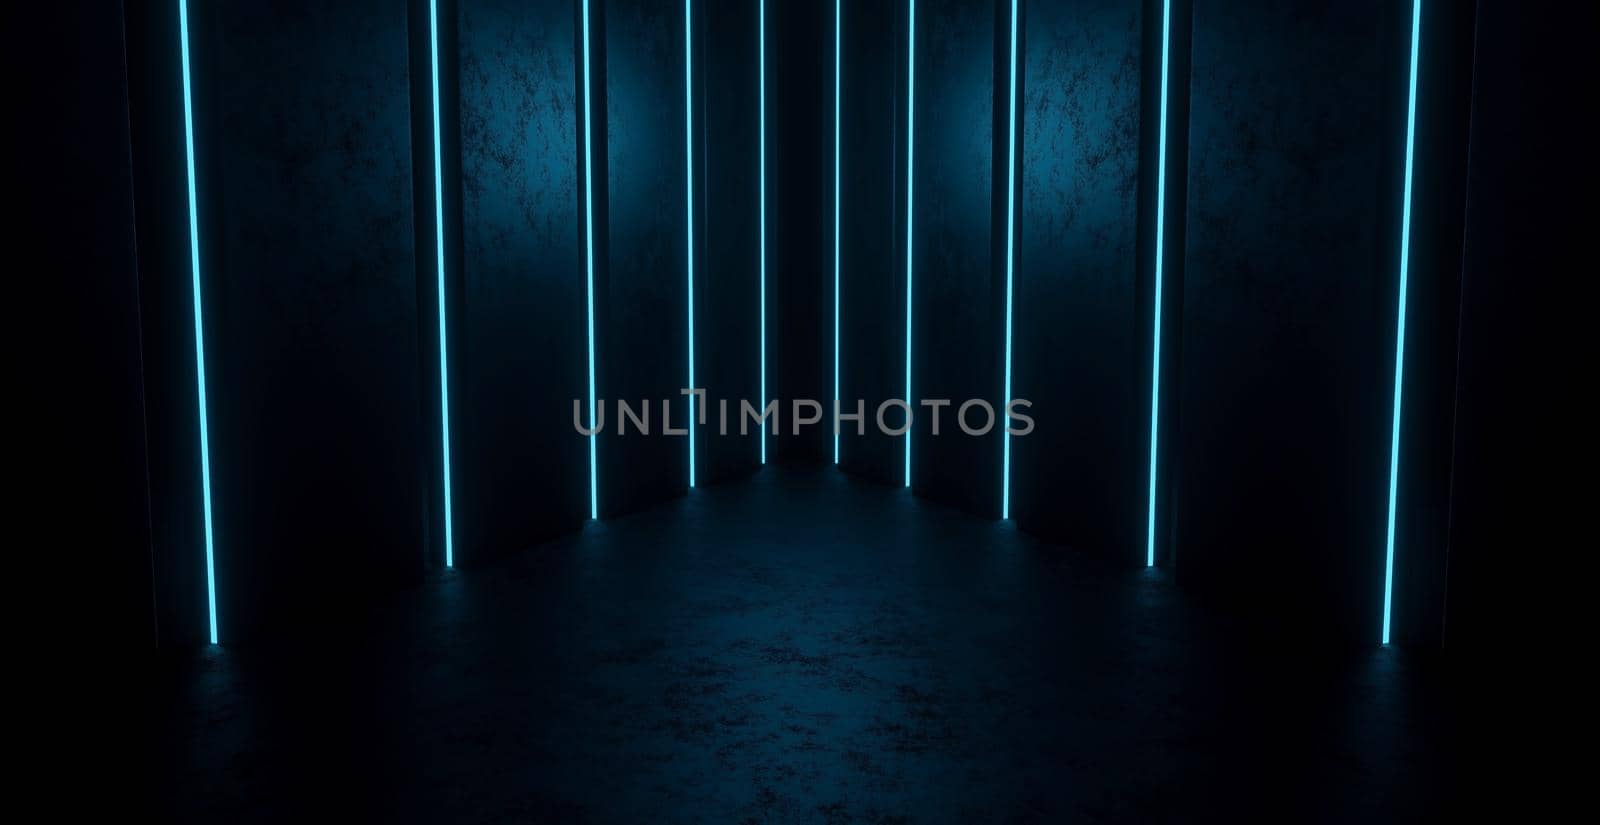 Robotic SciFi Empty Glowing Vibrant Laser Showcase Stage Corridor Hallway Entrance Lighted Black Illustrative Banner Background Wallpaper Digital Futurism Concept 3D Illustration